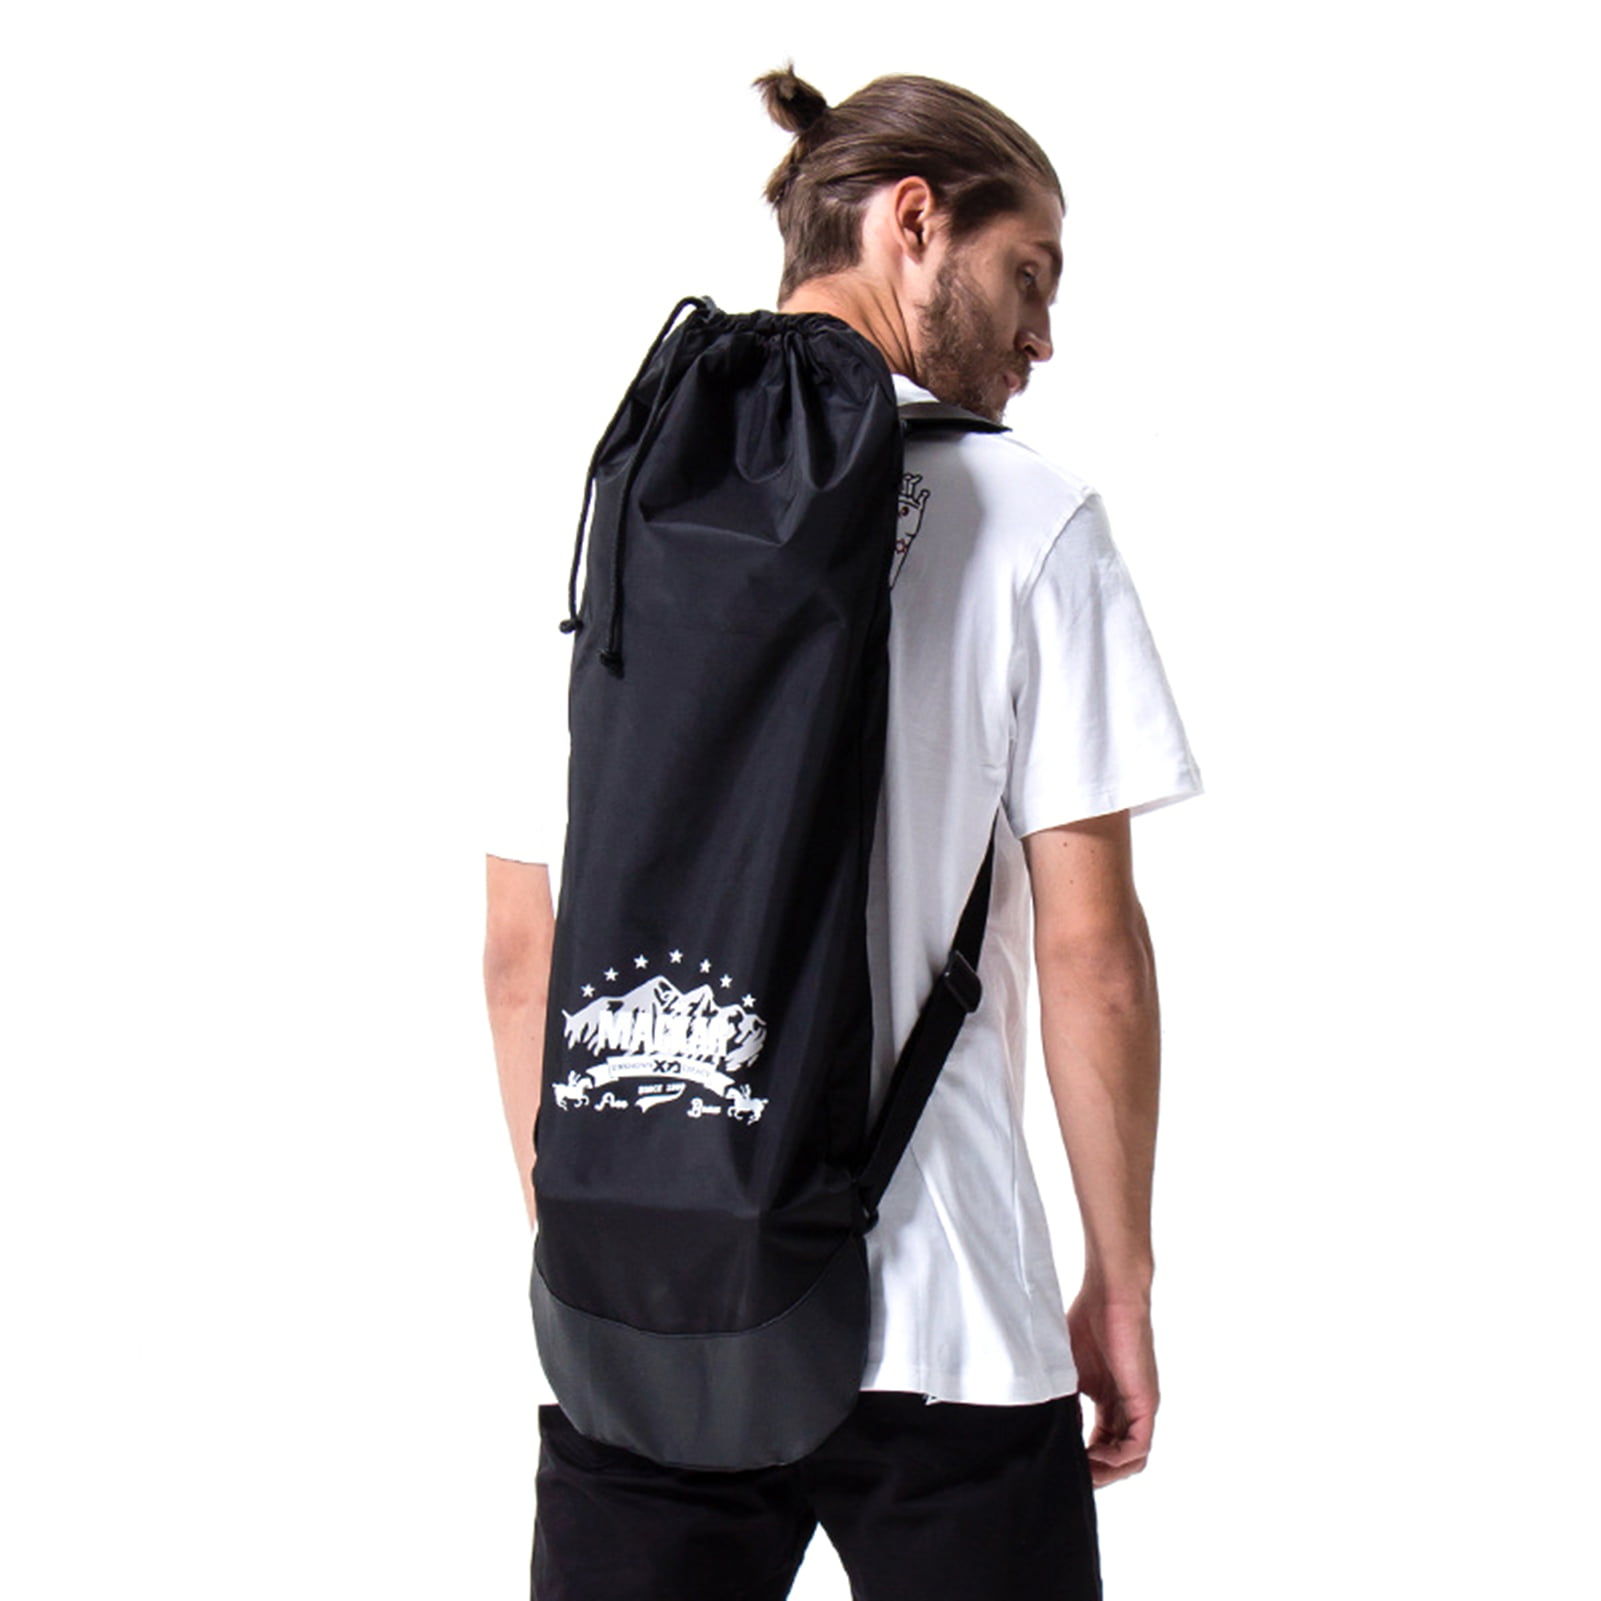 Mackar New Design Portable Skateboard Backpacks for Standard Board/Double-warped Skateboard,Skateboards Carry Bag for Travel Outdoor with 2 Adjustable Straps,Sports Bags for Men Adult 